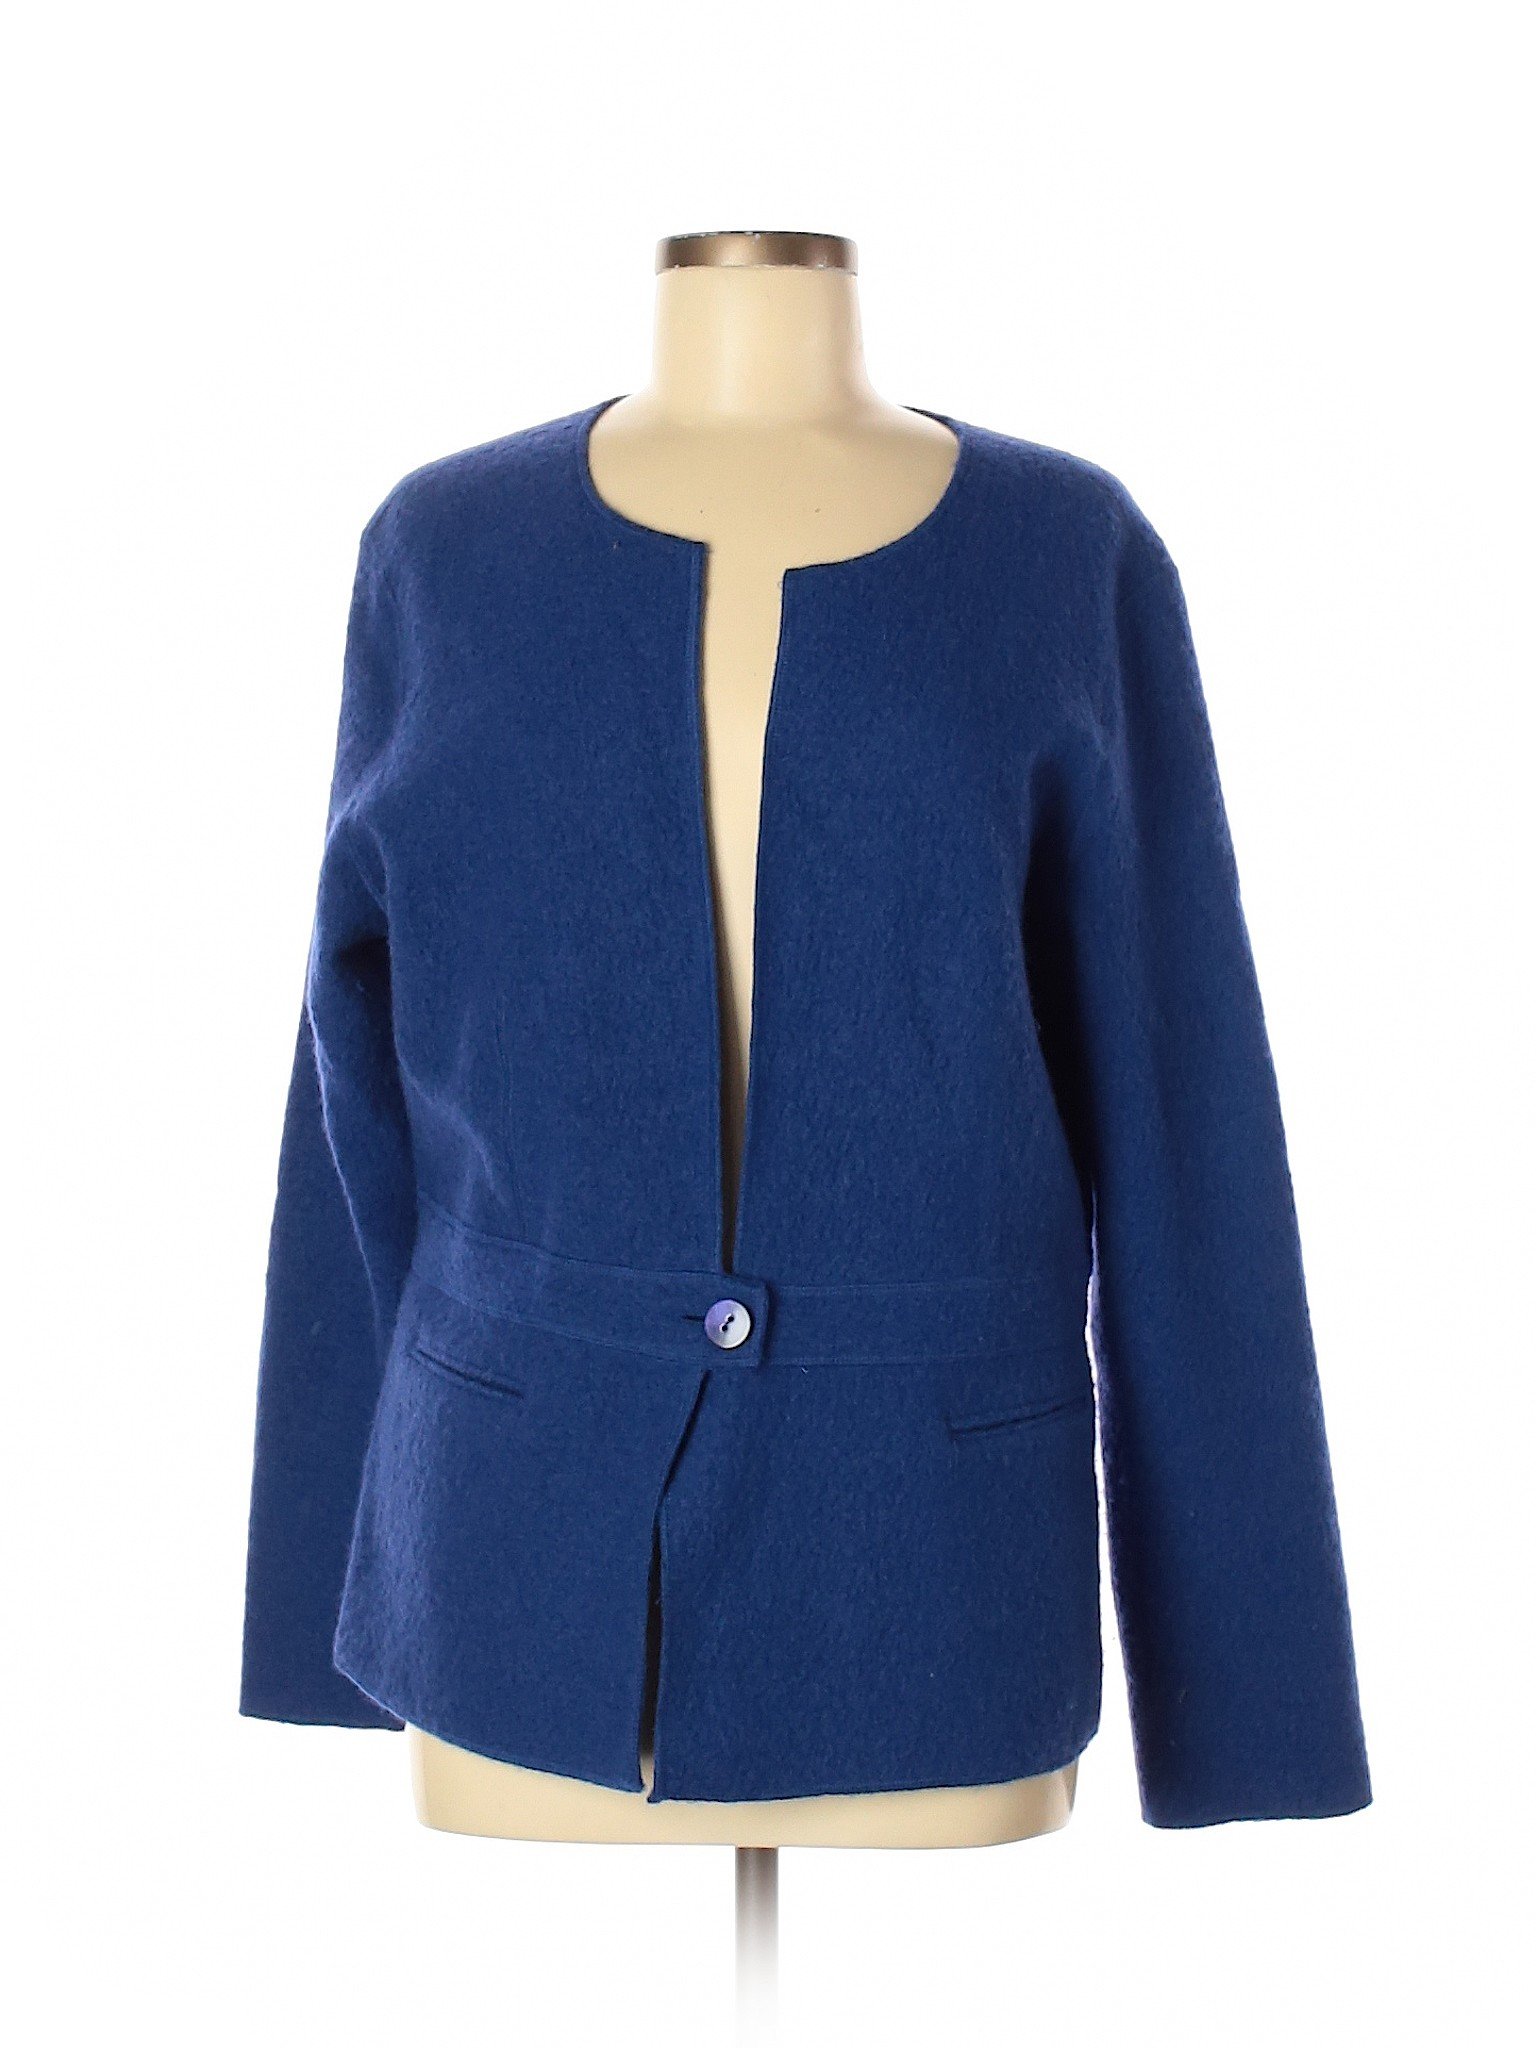 Talbots Women Blue Wool Blazer L | eBay